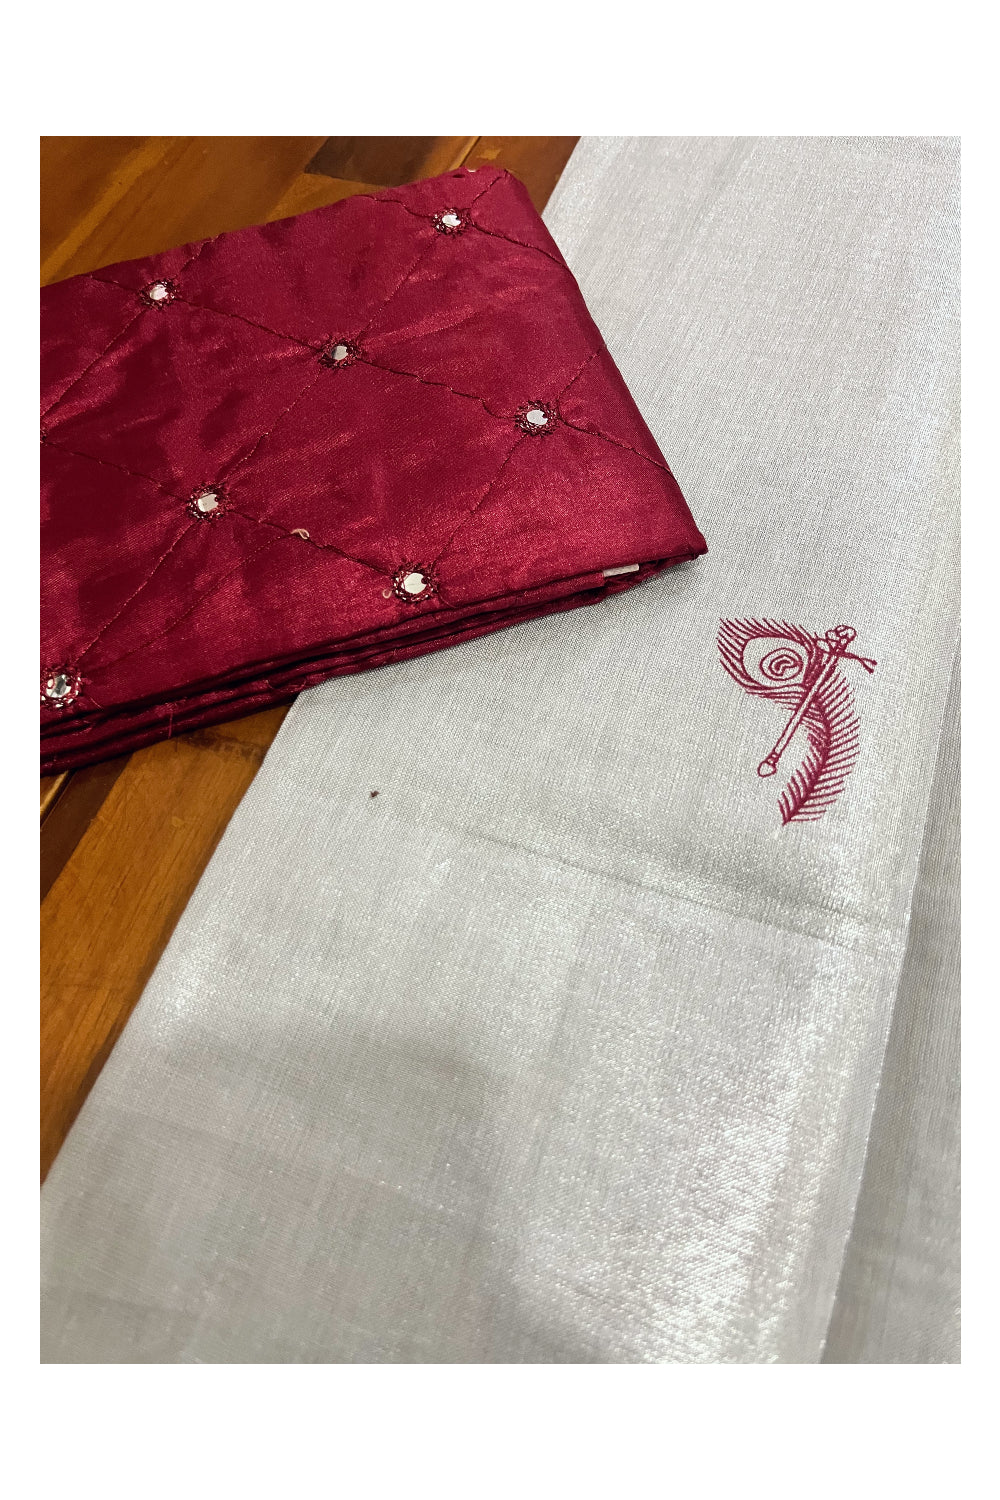 Kerala Silver Tissue Block Printed Pavada and Maroon Blouse Material for Kids 3 Meters